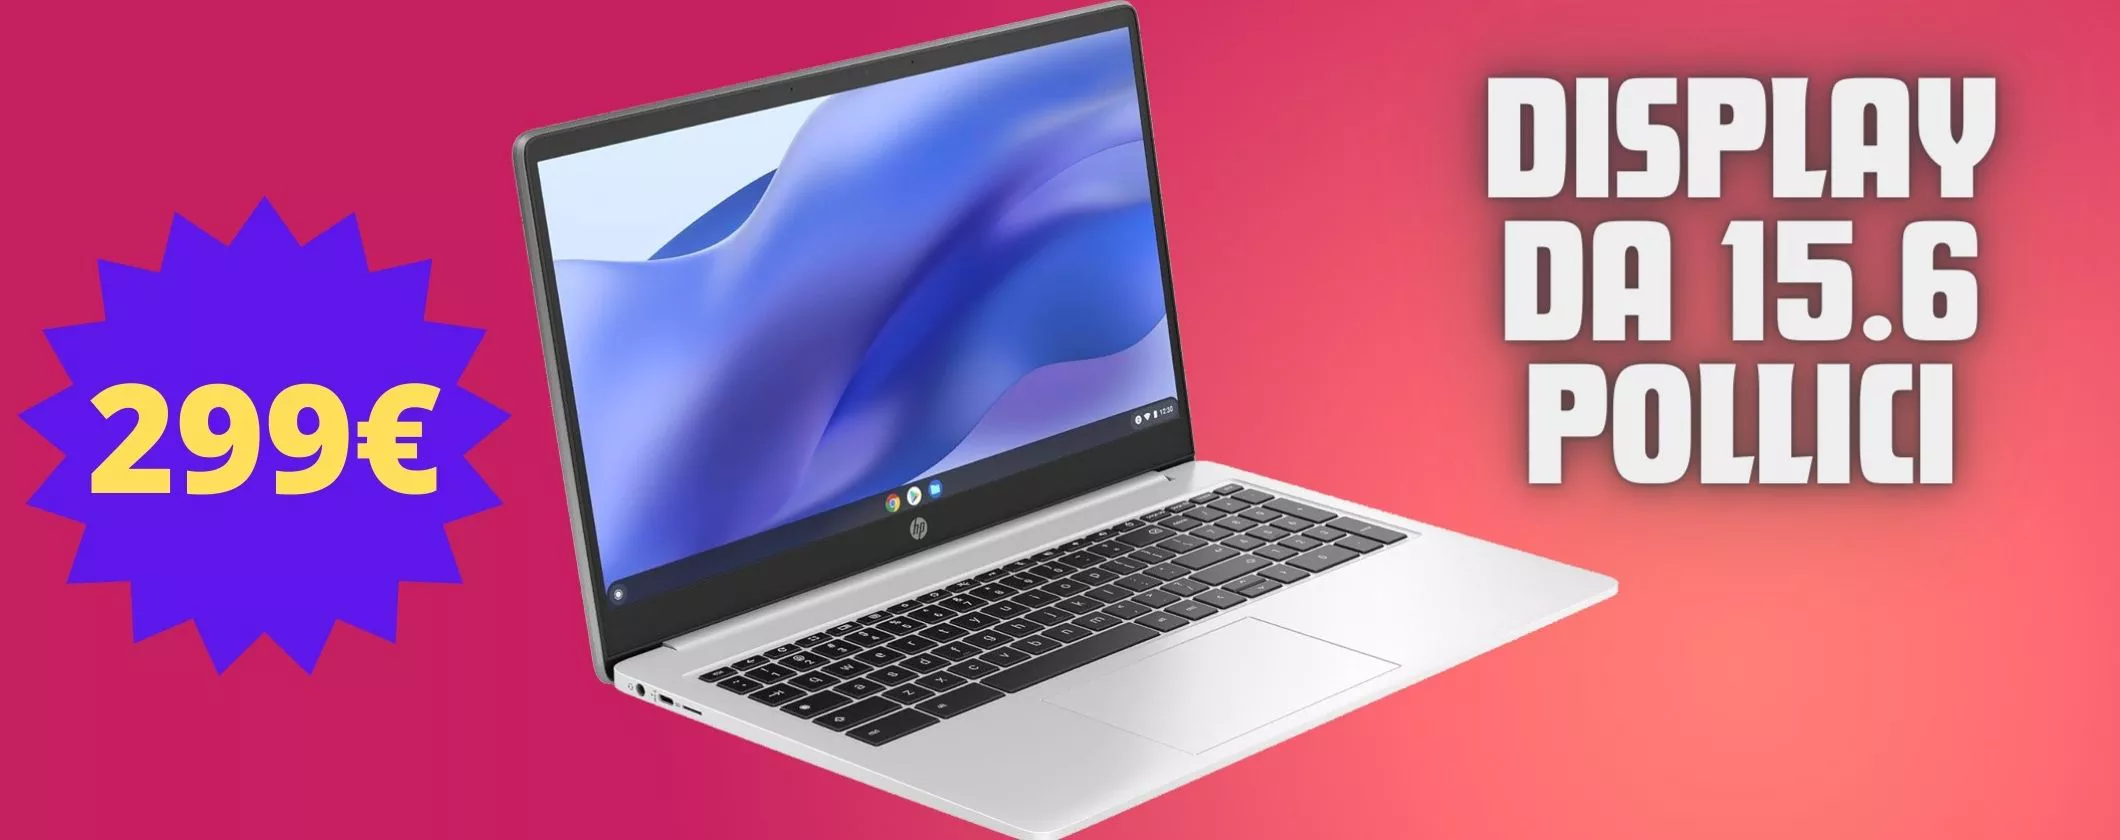 Prestazioni ECCEZIONALI con HP Chromebook in offerta a 299€